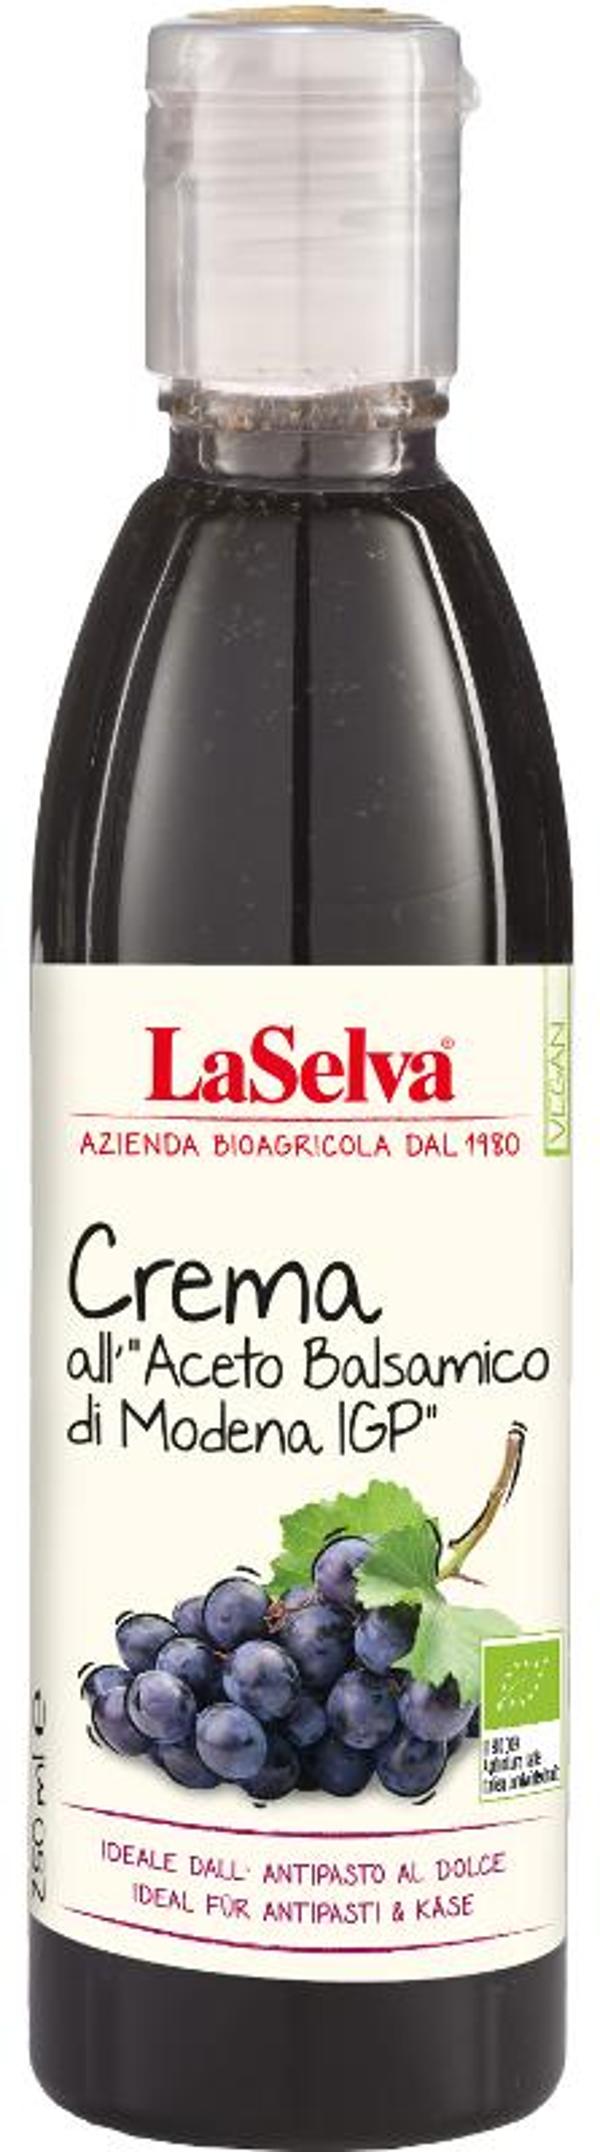 Produktfoto zu Crema di Balsamico Modena IGP von LaSelva Toskana